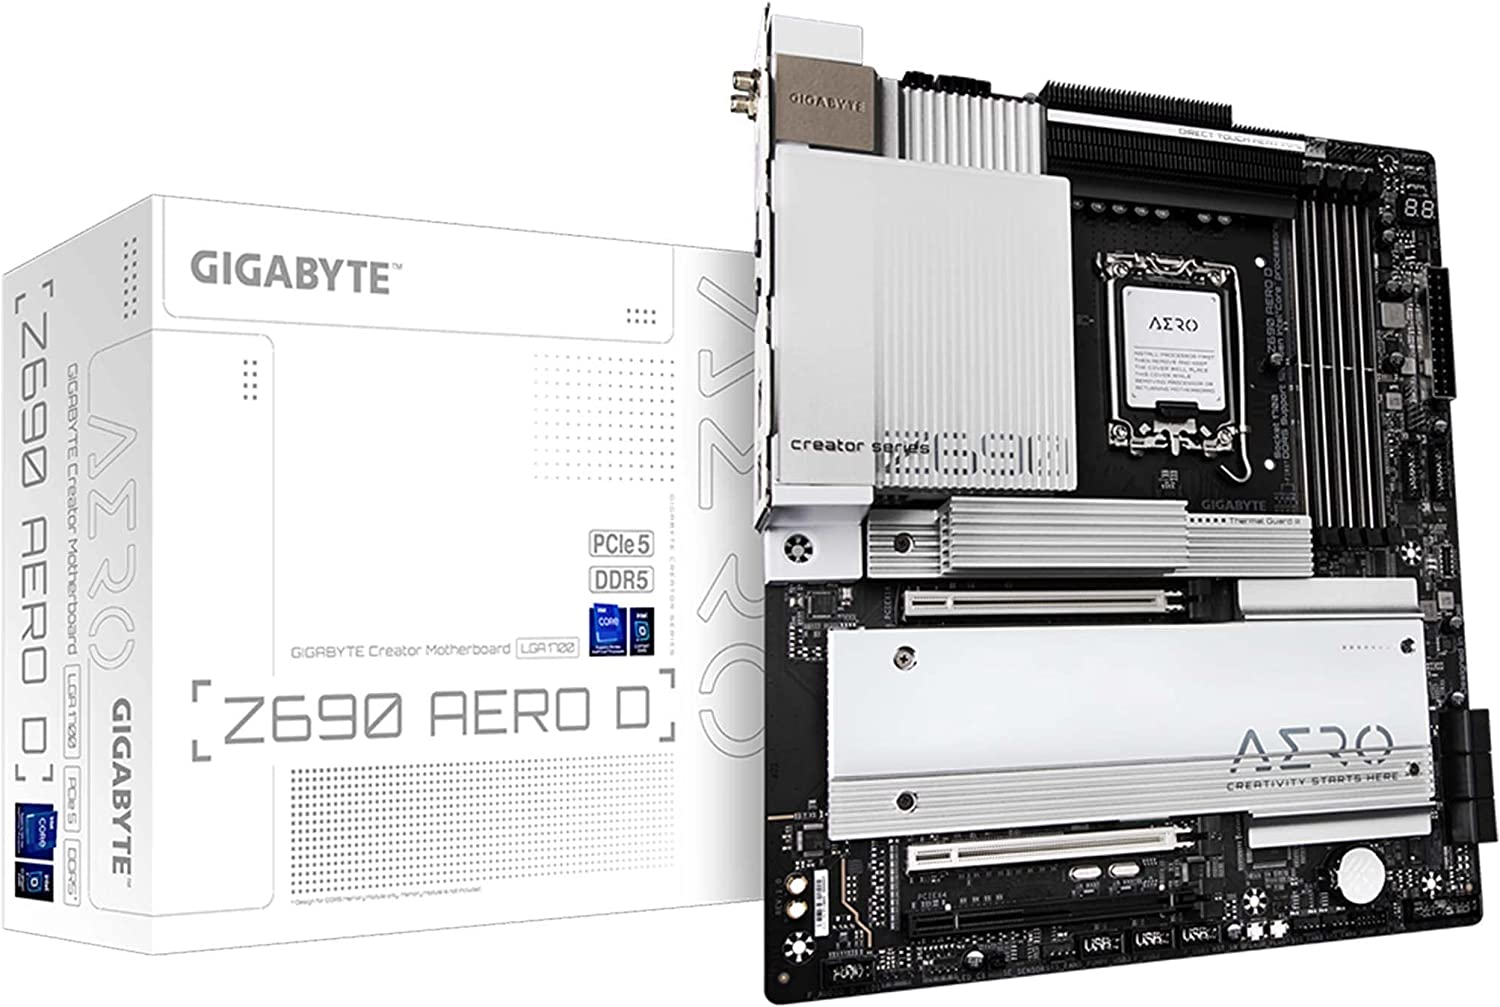 Gigabyte Z690 AERO D motherboard Intel Z690 LGA 1700 ATX